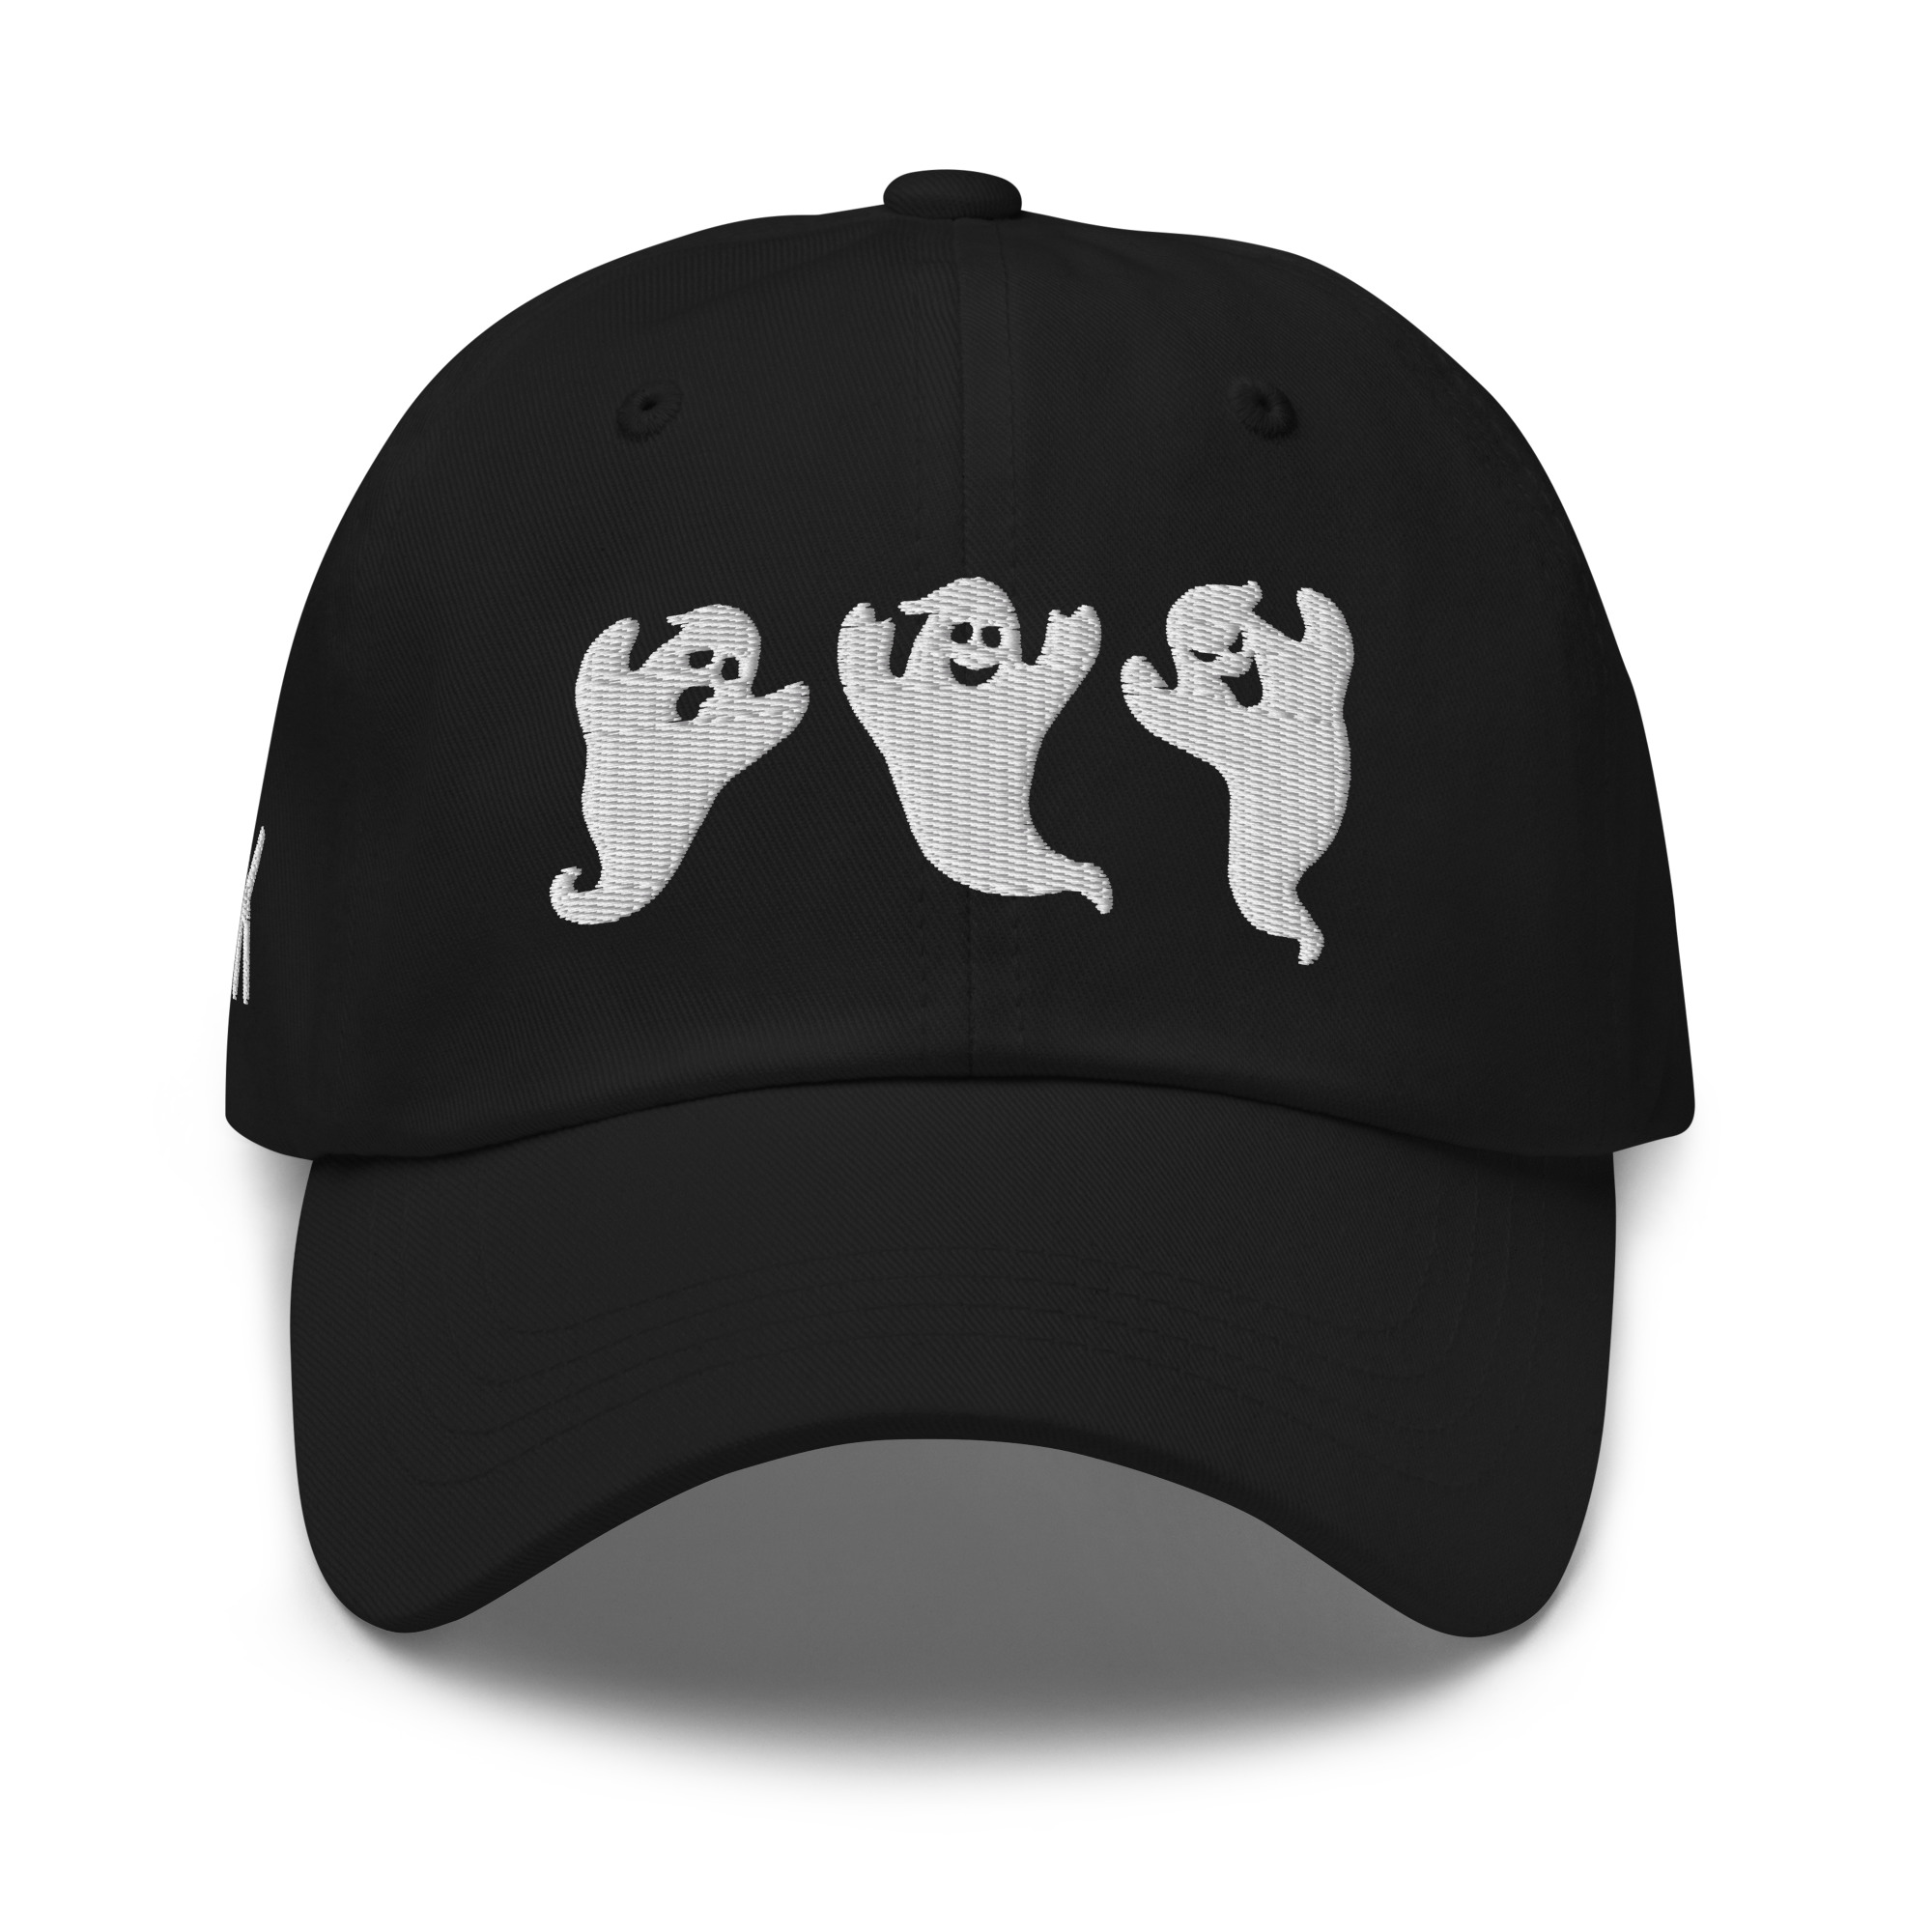 Ghosty Black Baseball hat